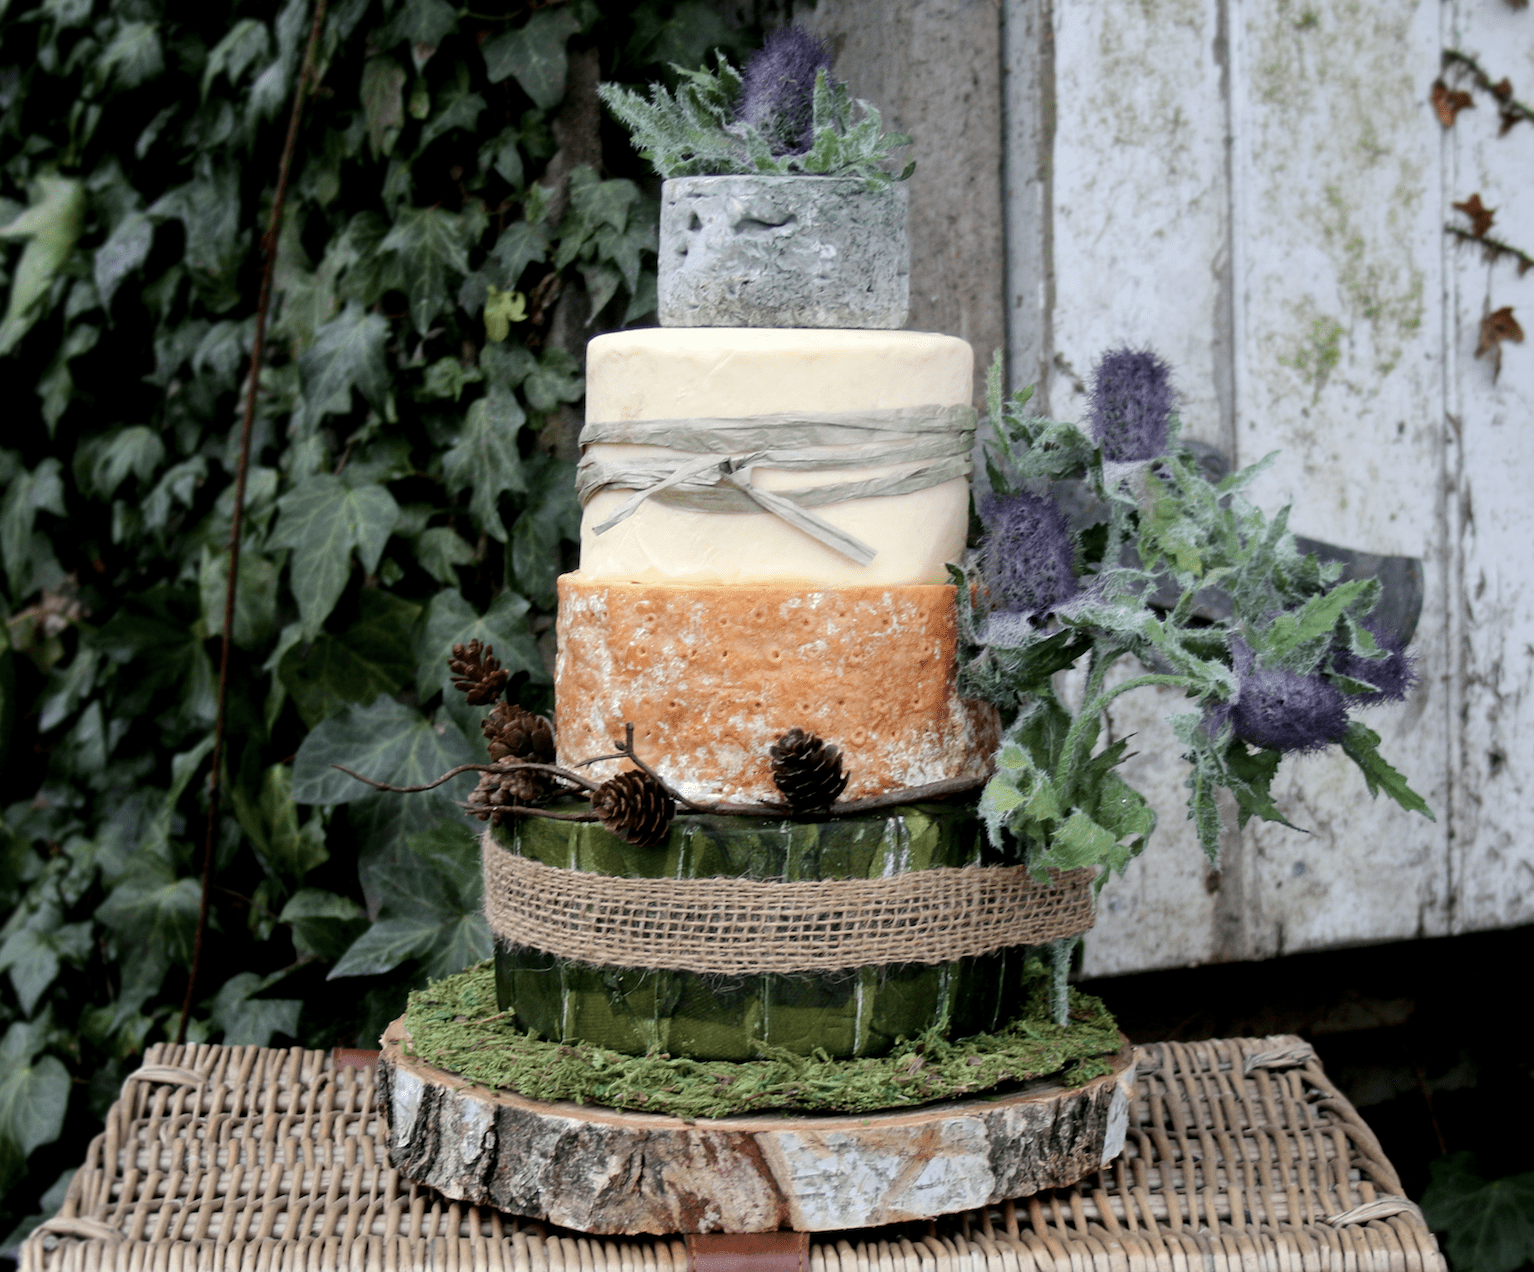 Sylvania Celebration Cake - serves 40-45 - Celebration Cheeses